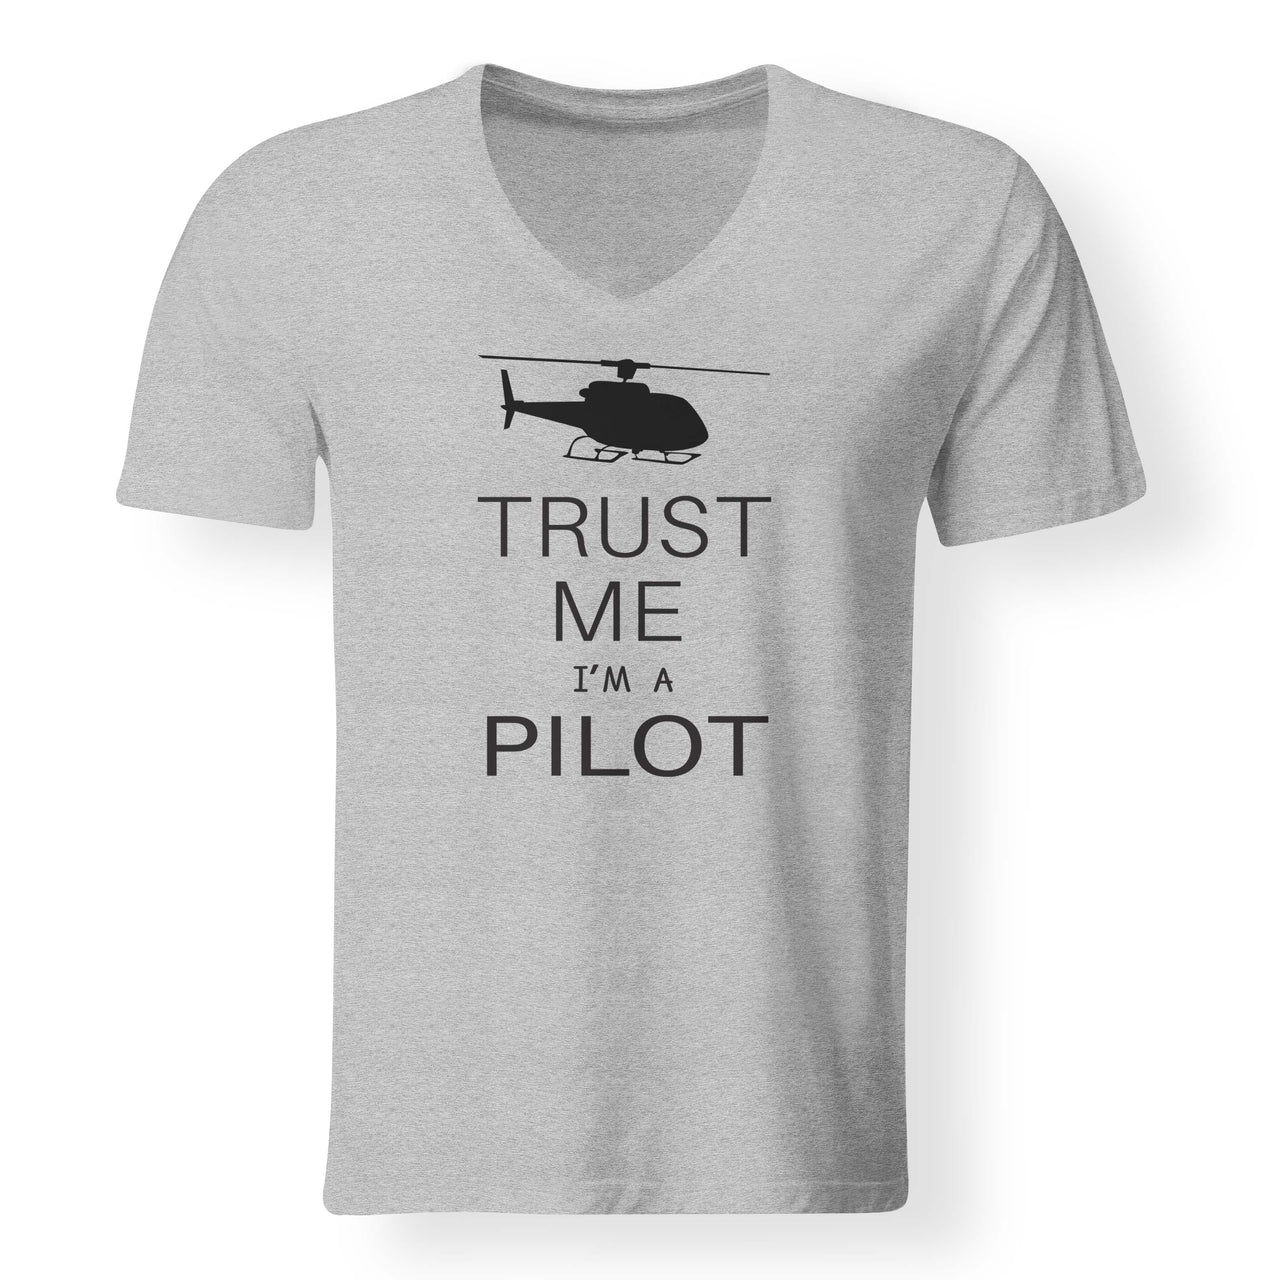 Trust Me I'm a Pilot (Helicopter) Designed V-Neck T-Shirts